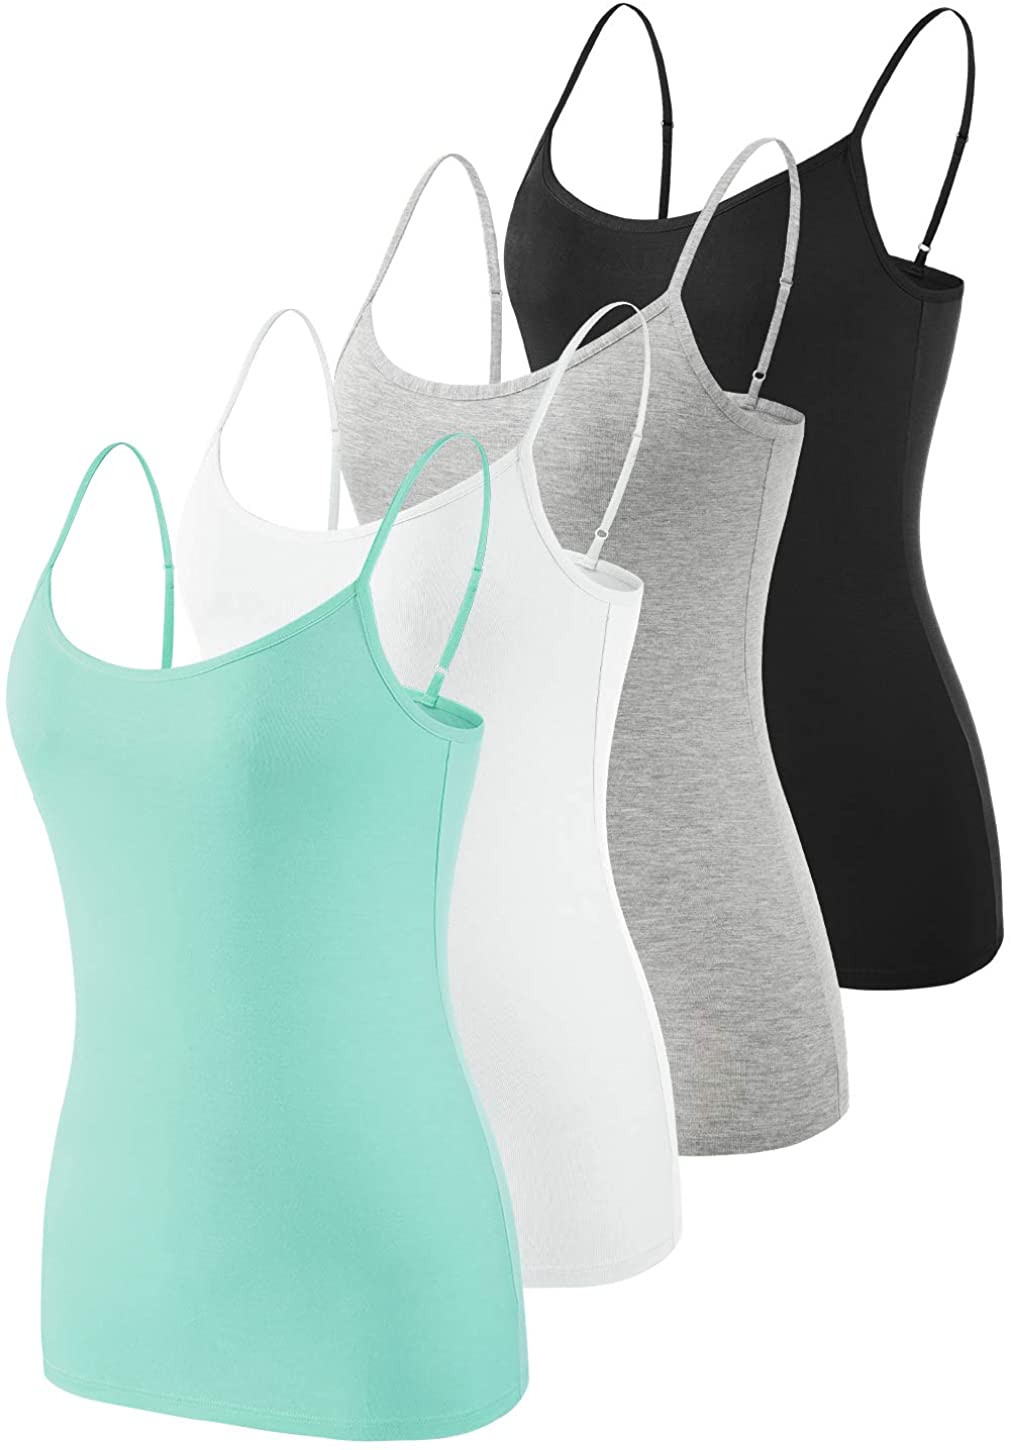  Vislivin Womens Cotton Camisole Adjustable Strap Tank Tops